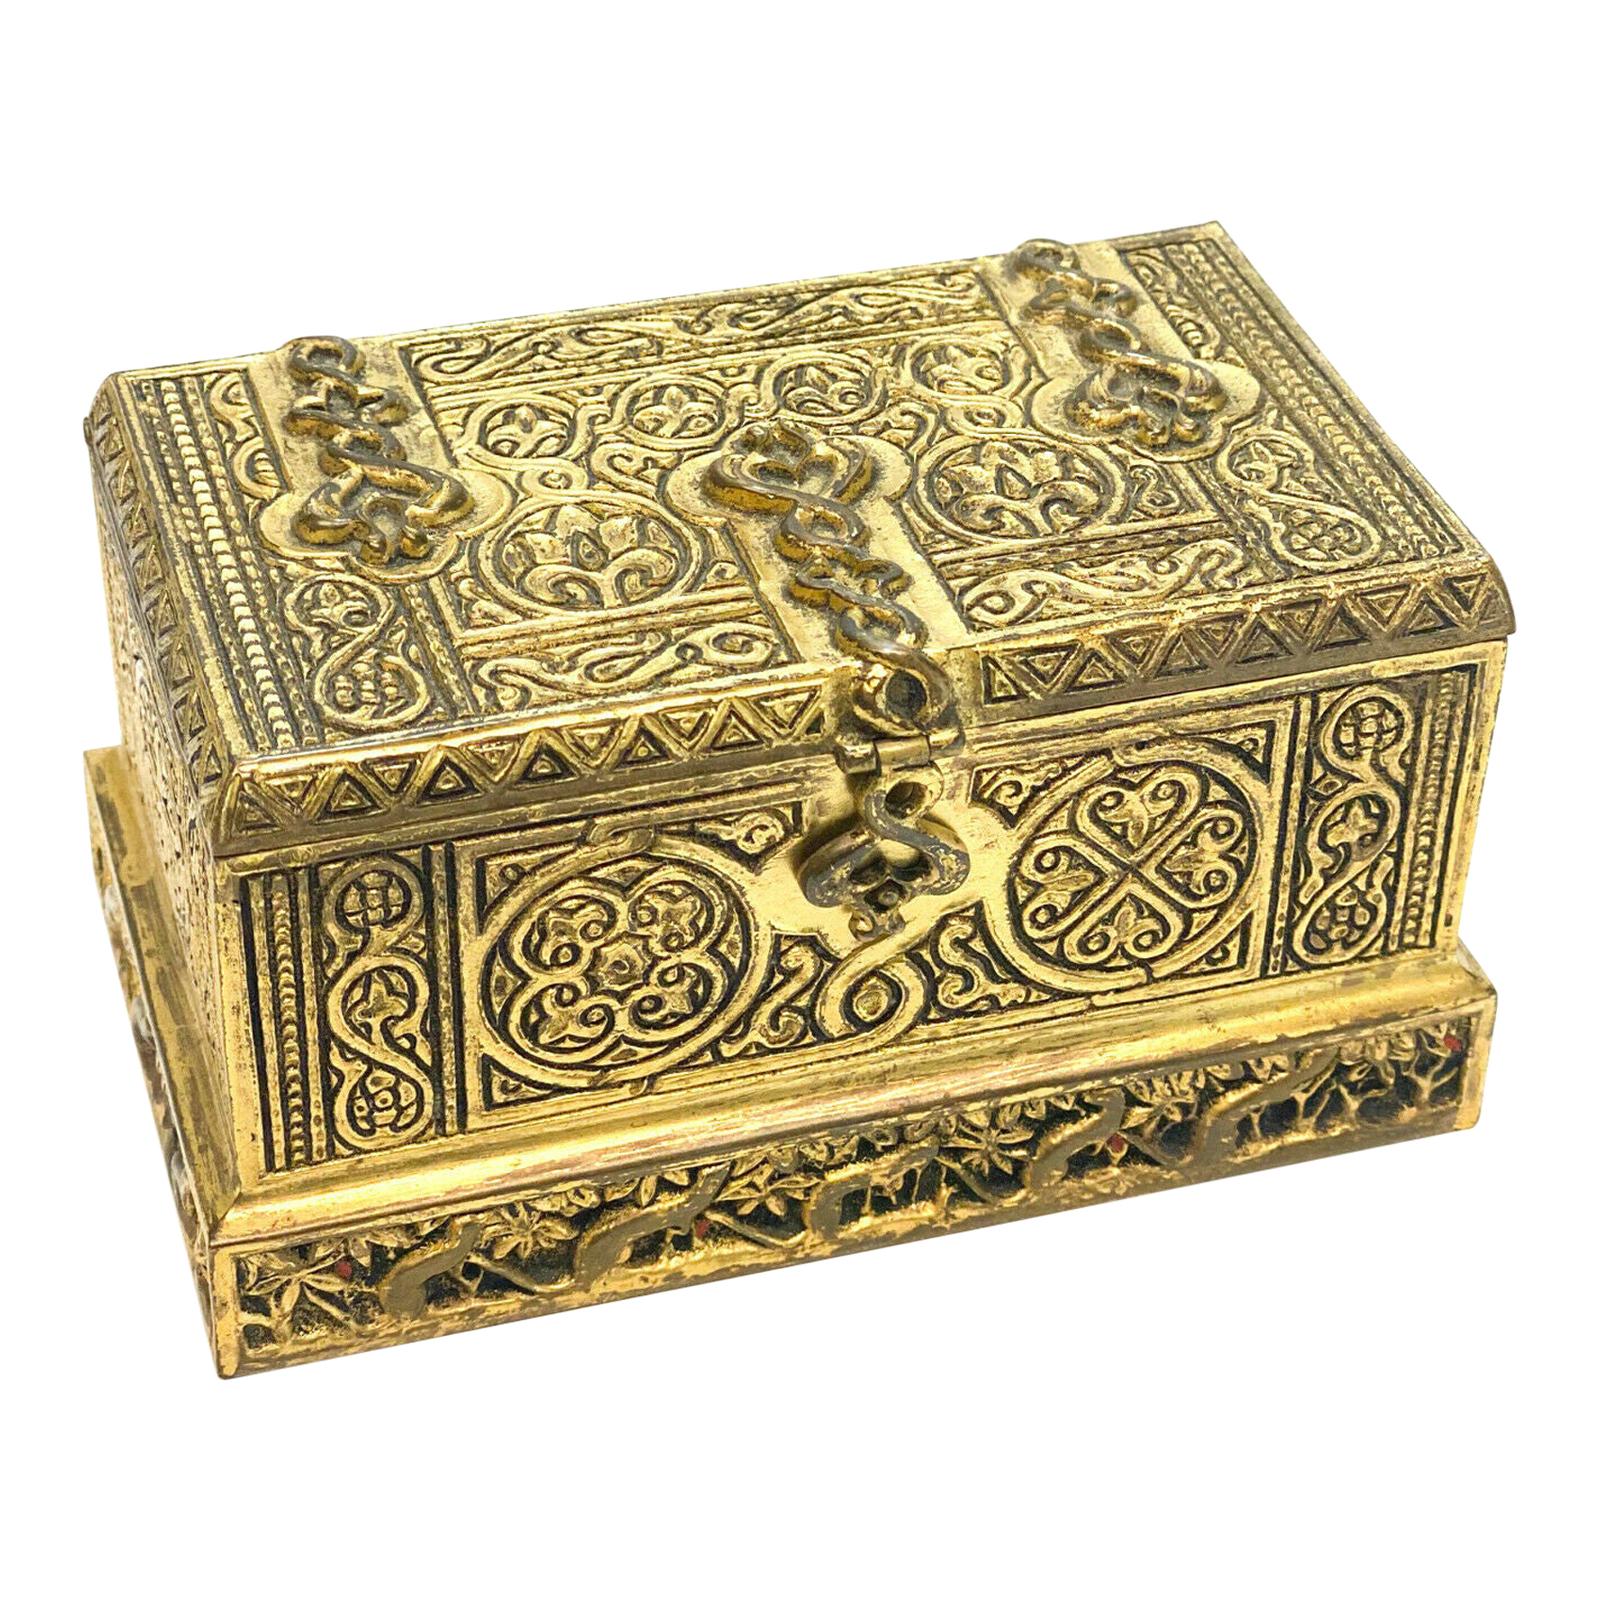 Tiffany & Co. Studios New York Gilt Bronze Inkwell Box in Venetian #1641 For Sale